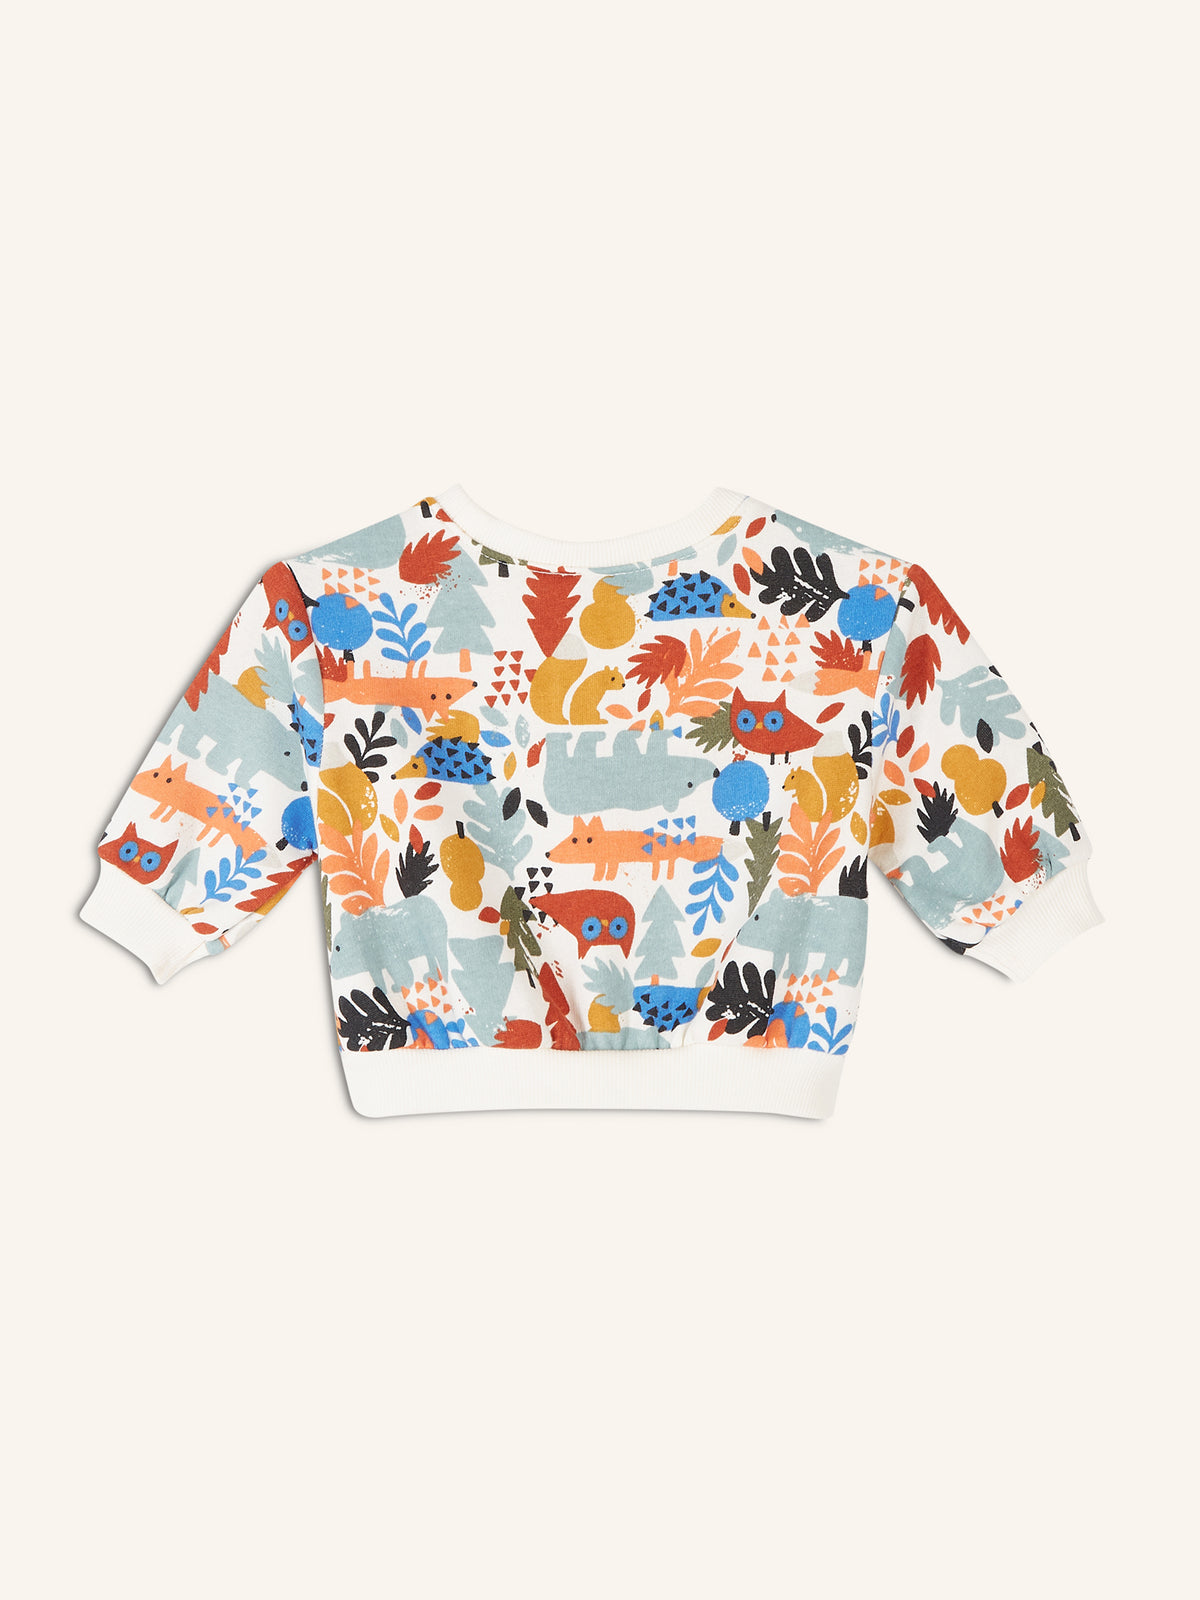 Unisex Printed Sweatshirt for Baby